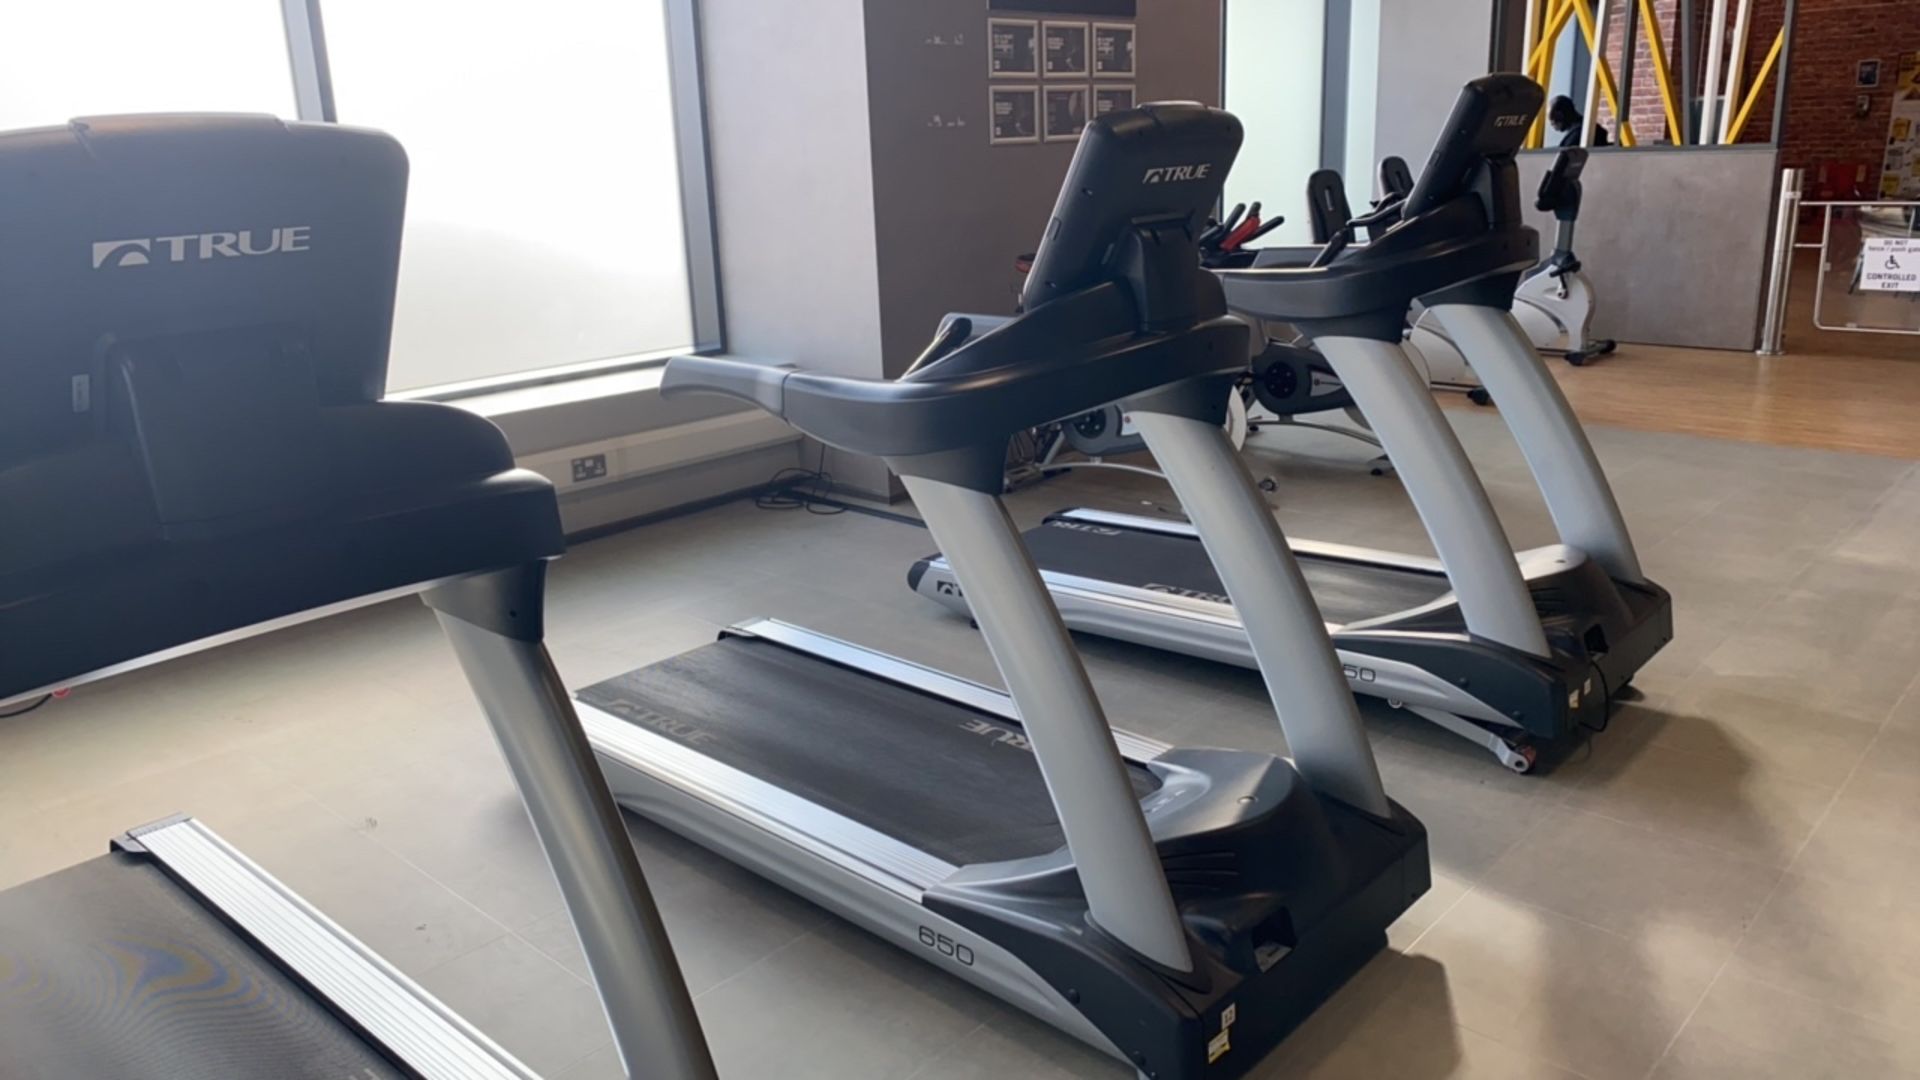 True Fitness Treadmill x1 - Image 2 of 4